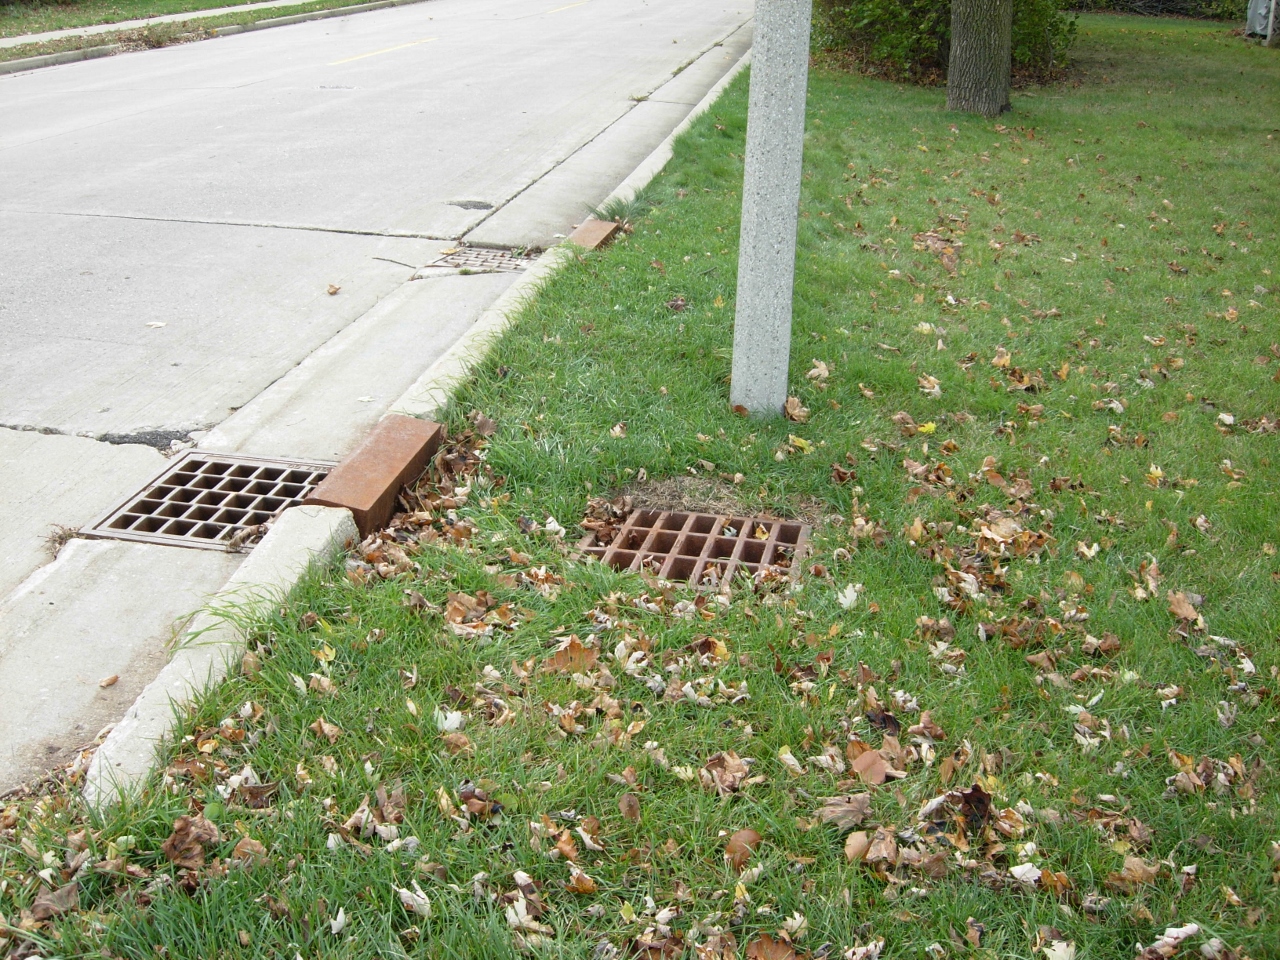 a drain hole on the side of a street near a tree